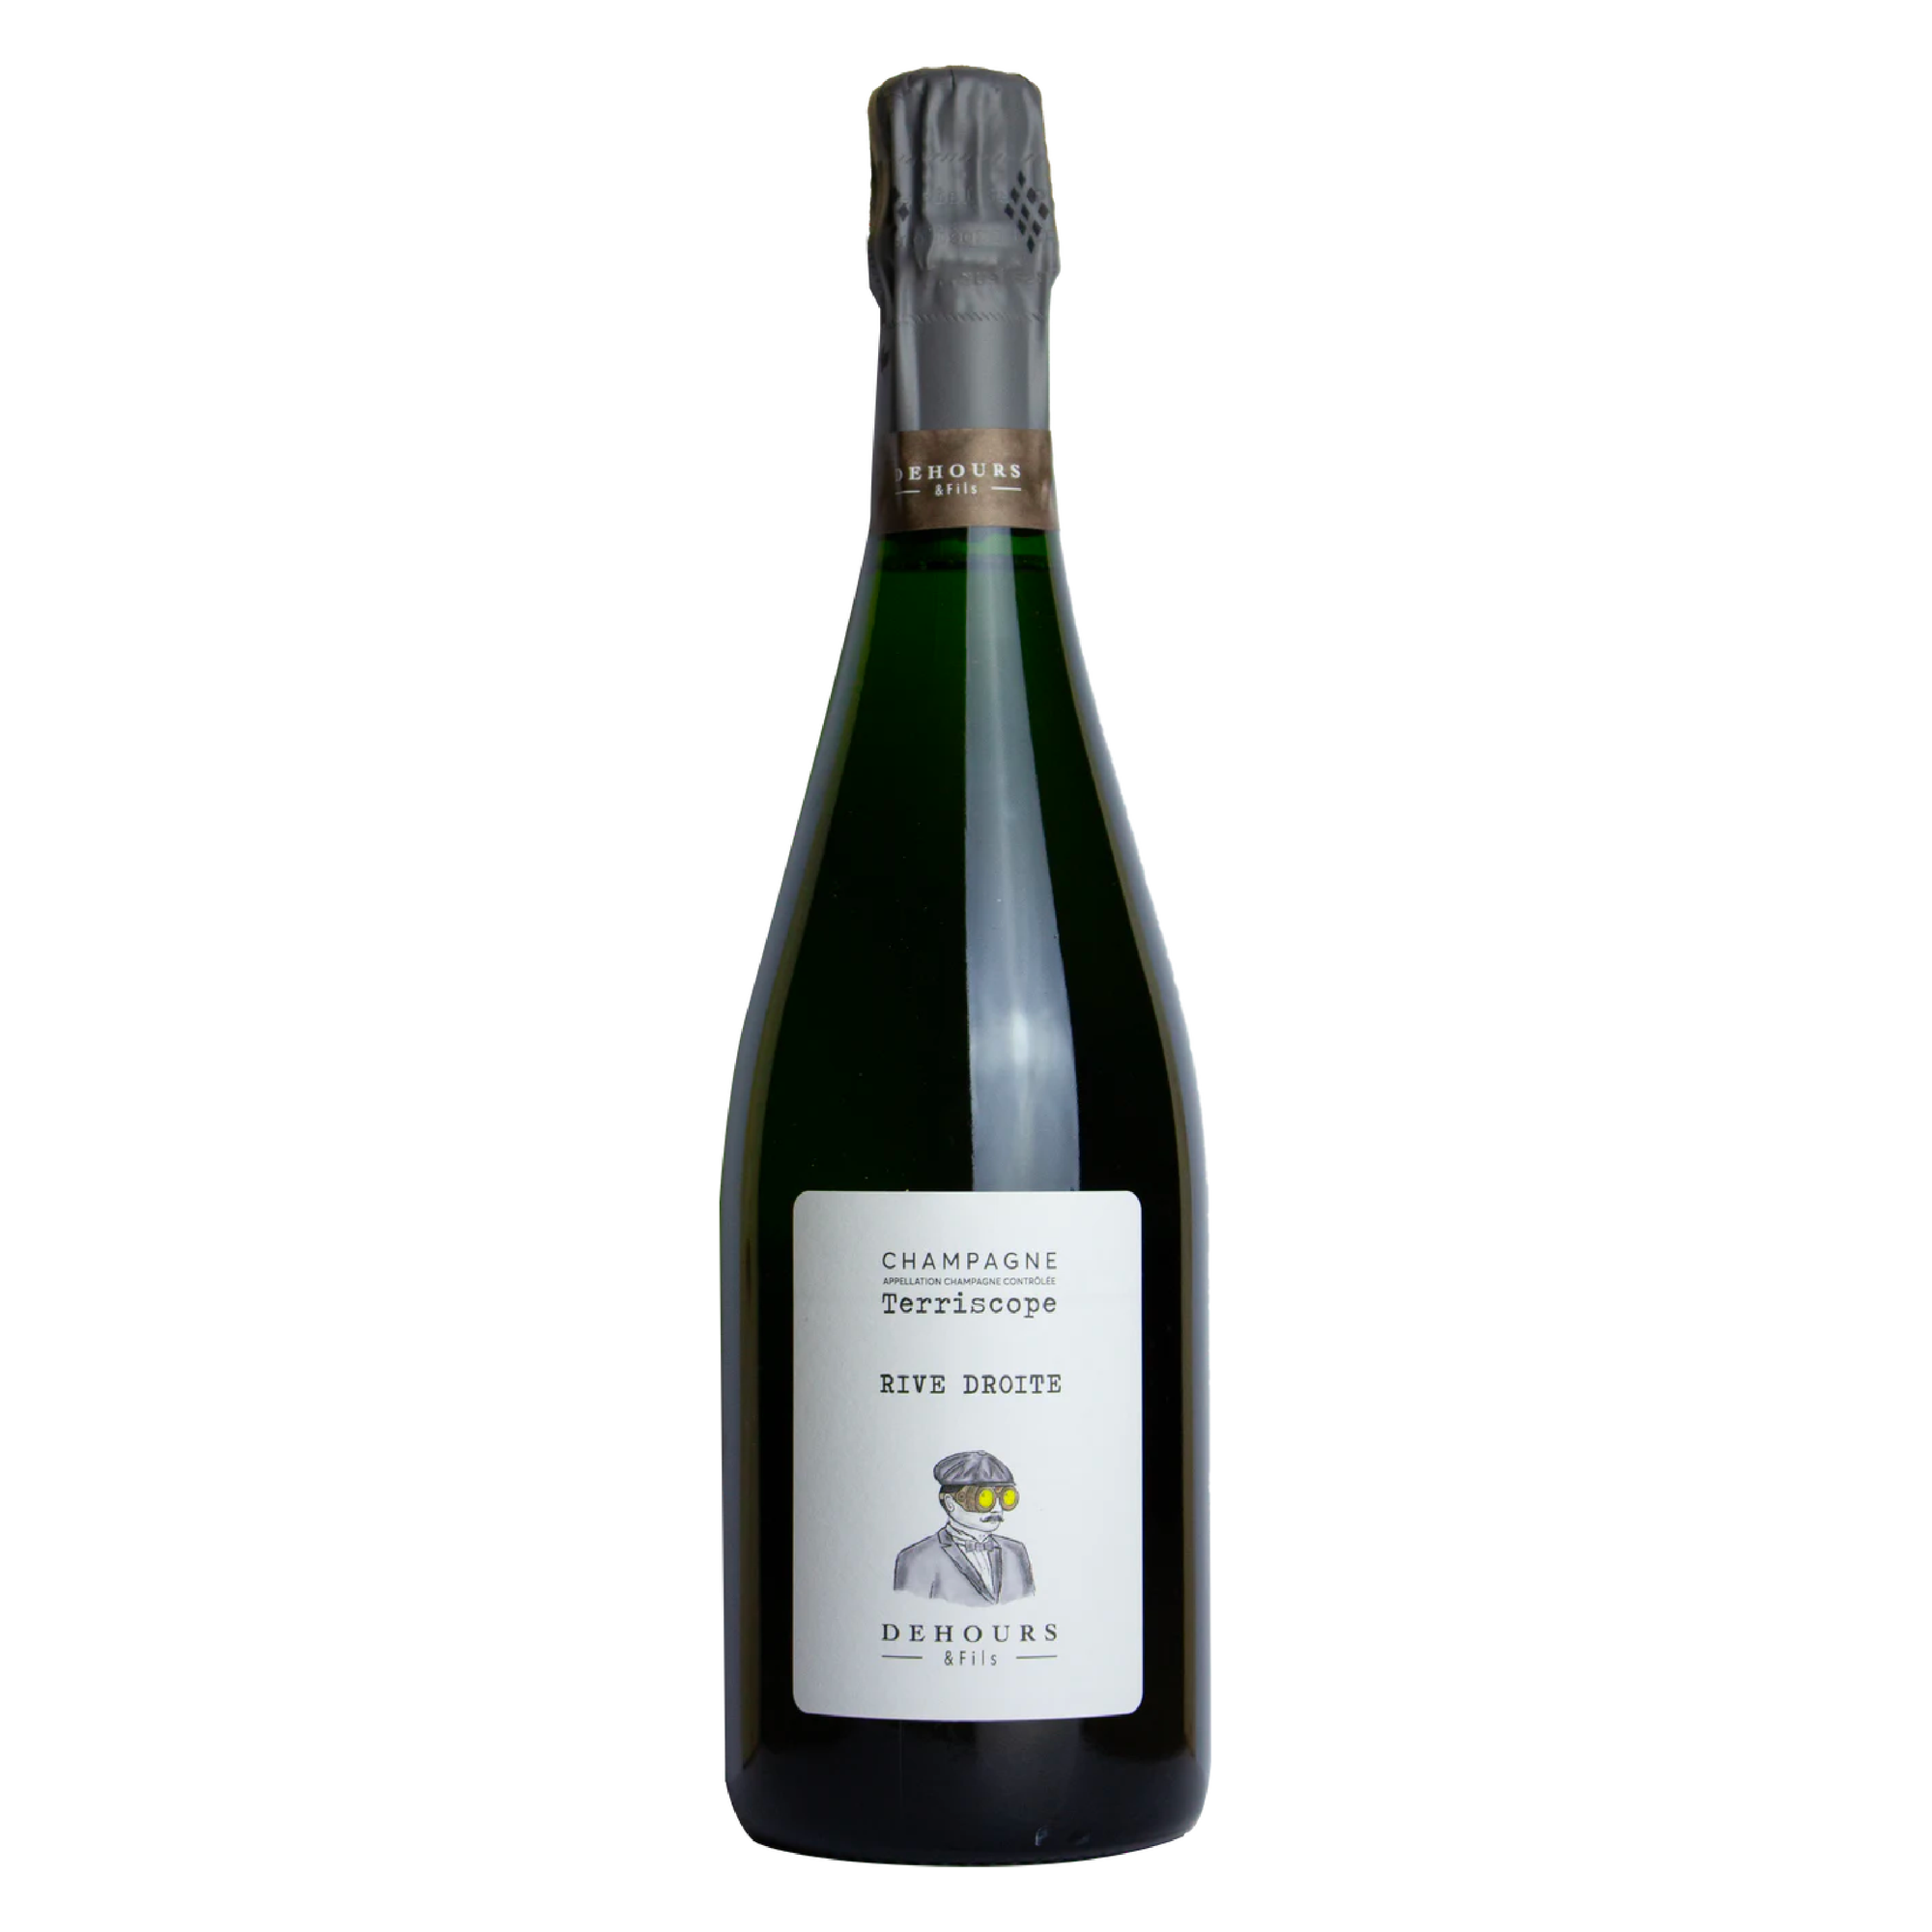 DEHOURS & FILS Champagne Brut "Terriscope - Rive Droite" NV